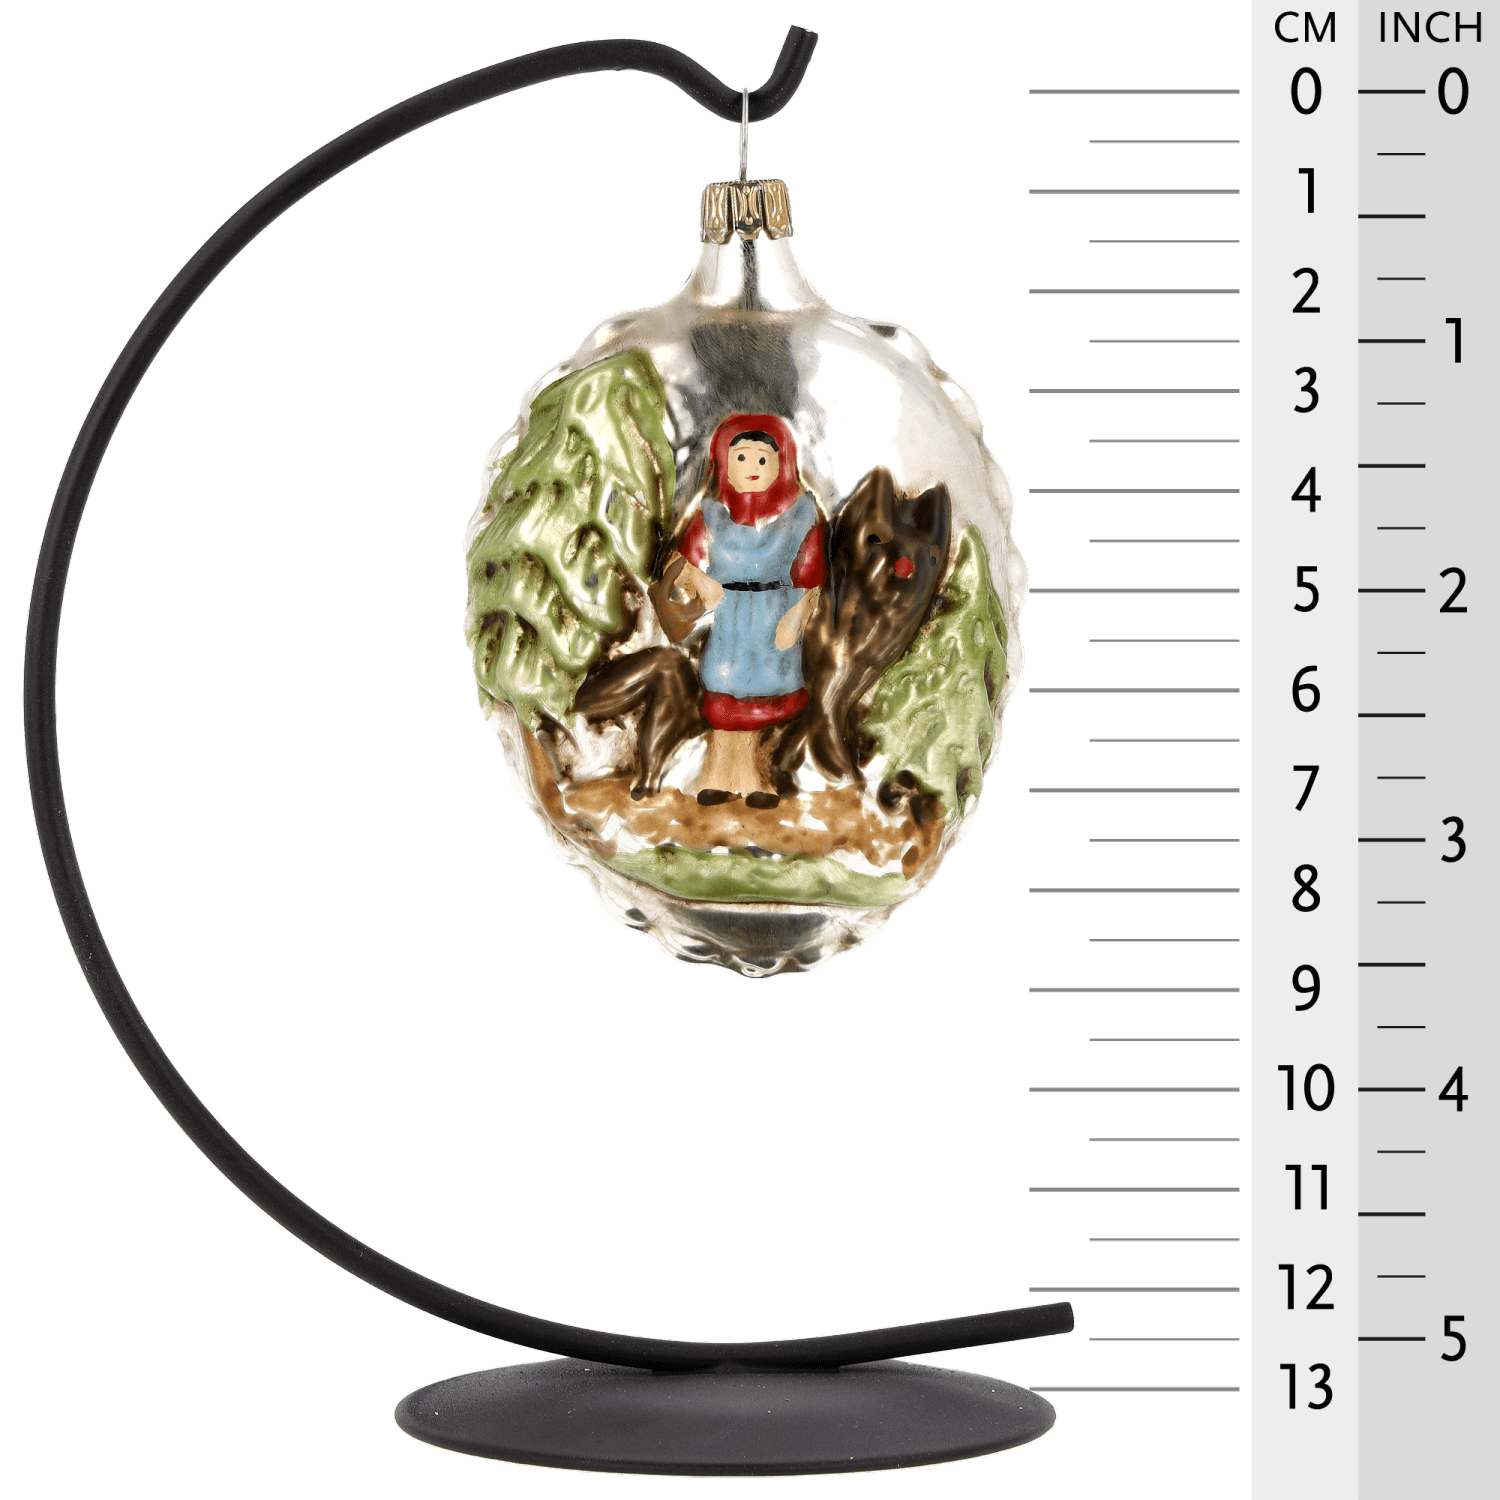 MAROLIN® - Glass ornament "Little Red Riding Hood"